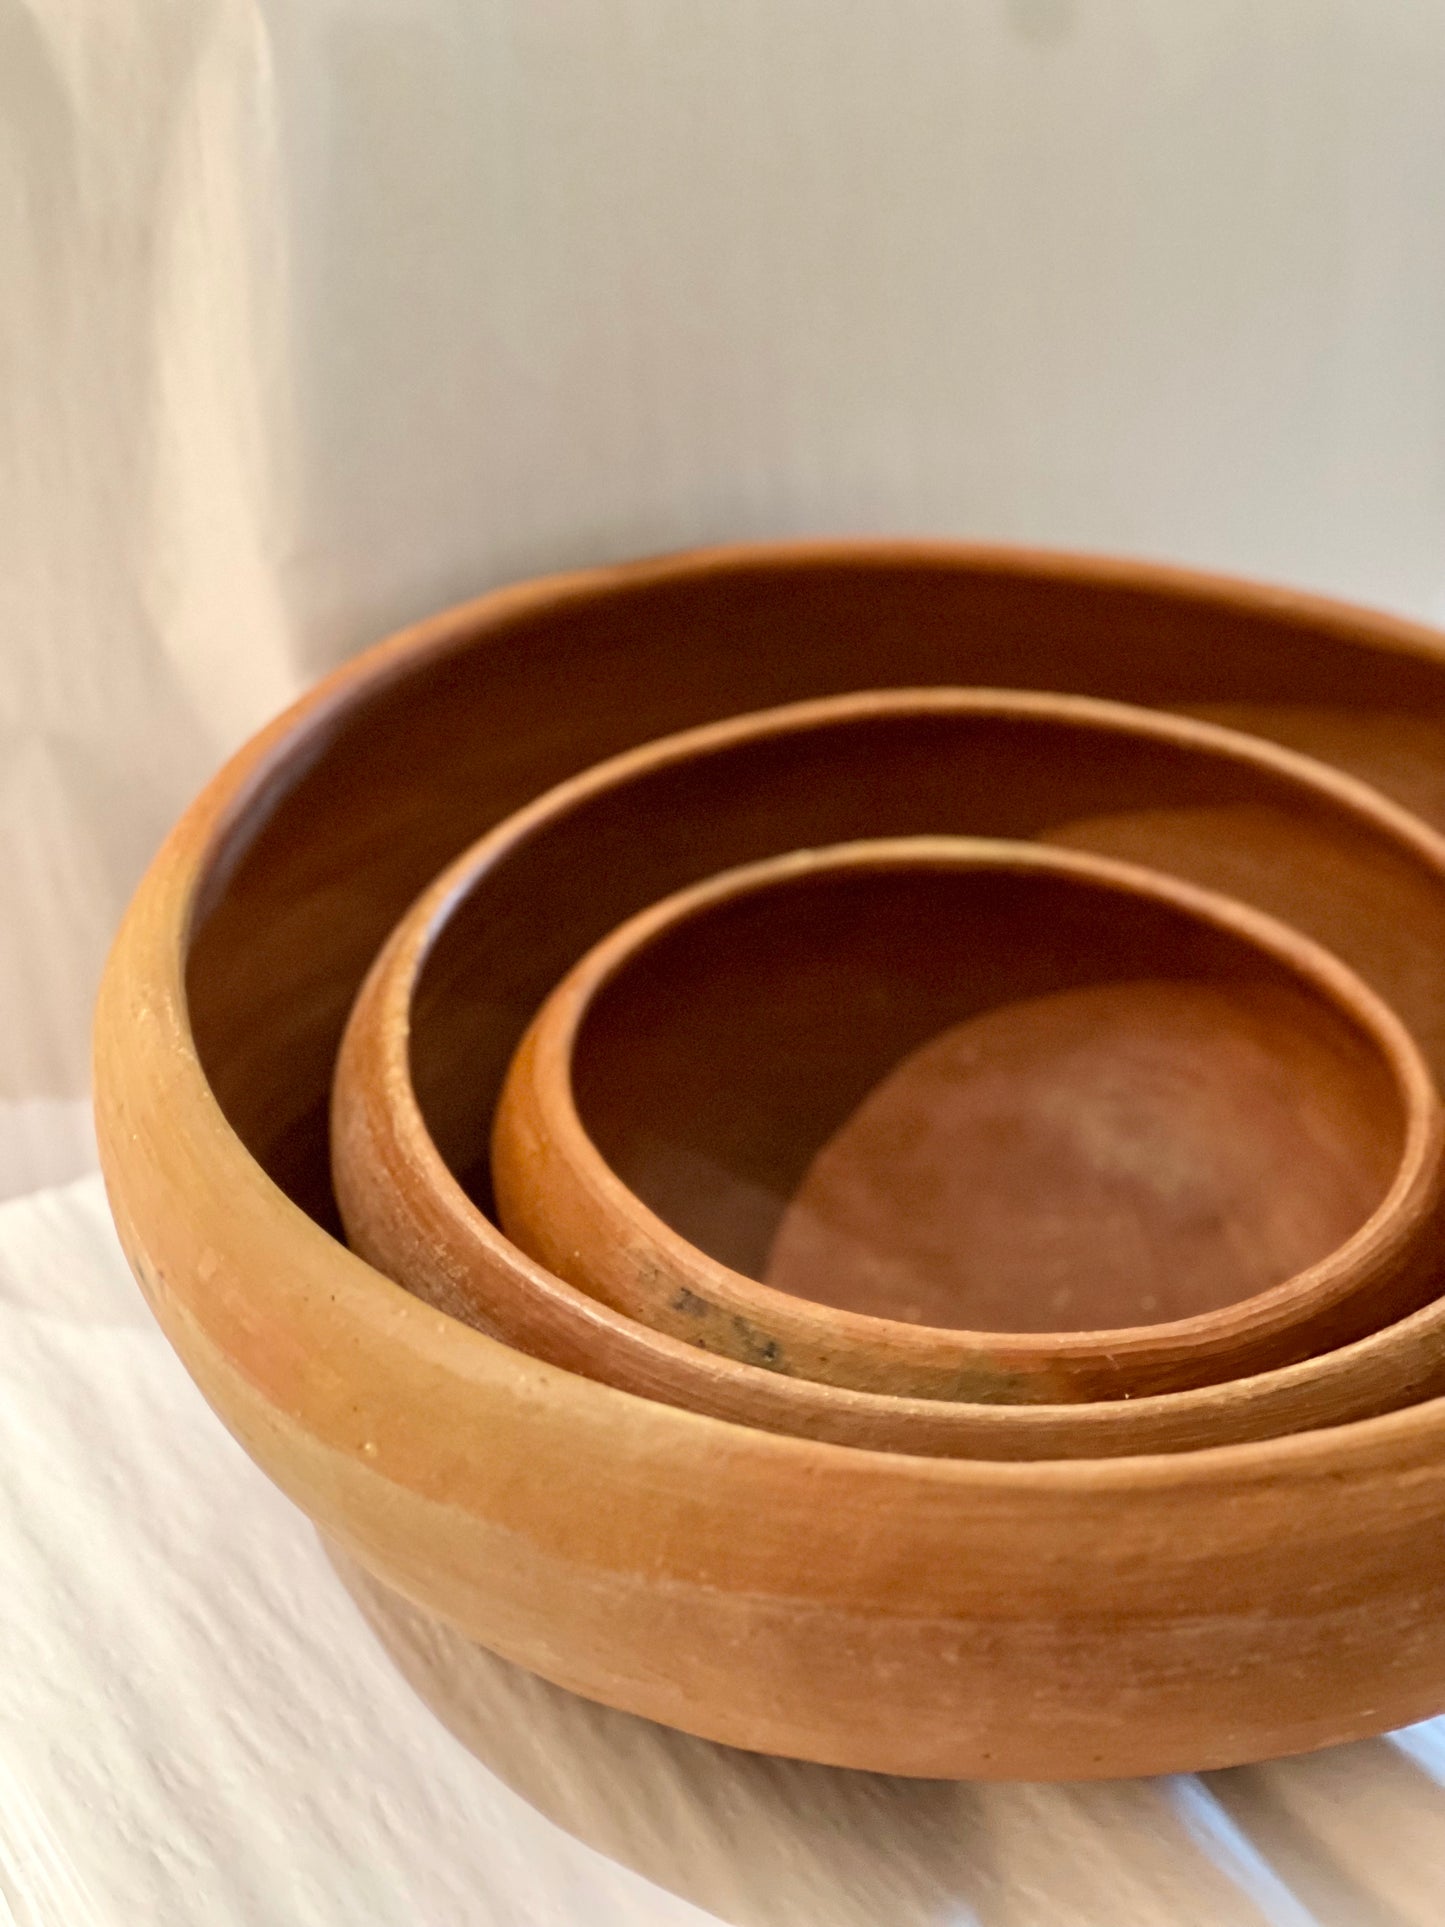 Oaxaca Clay Pottery Serving Bowls